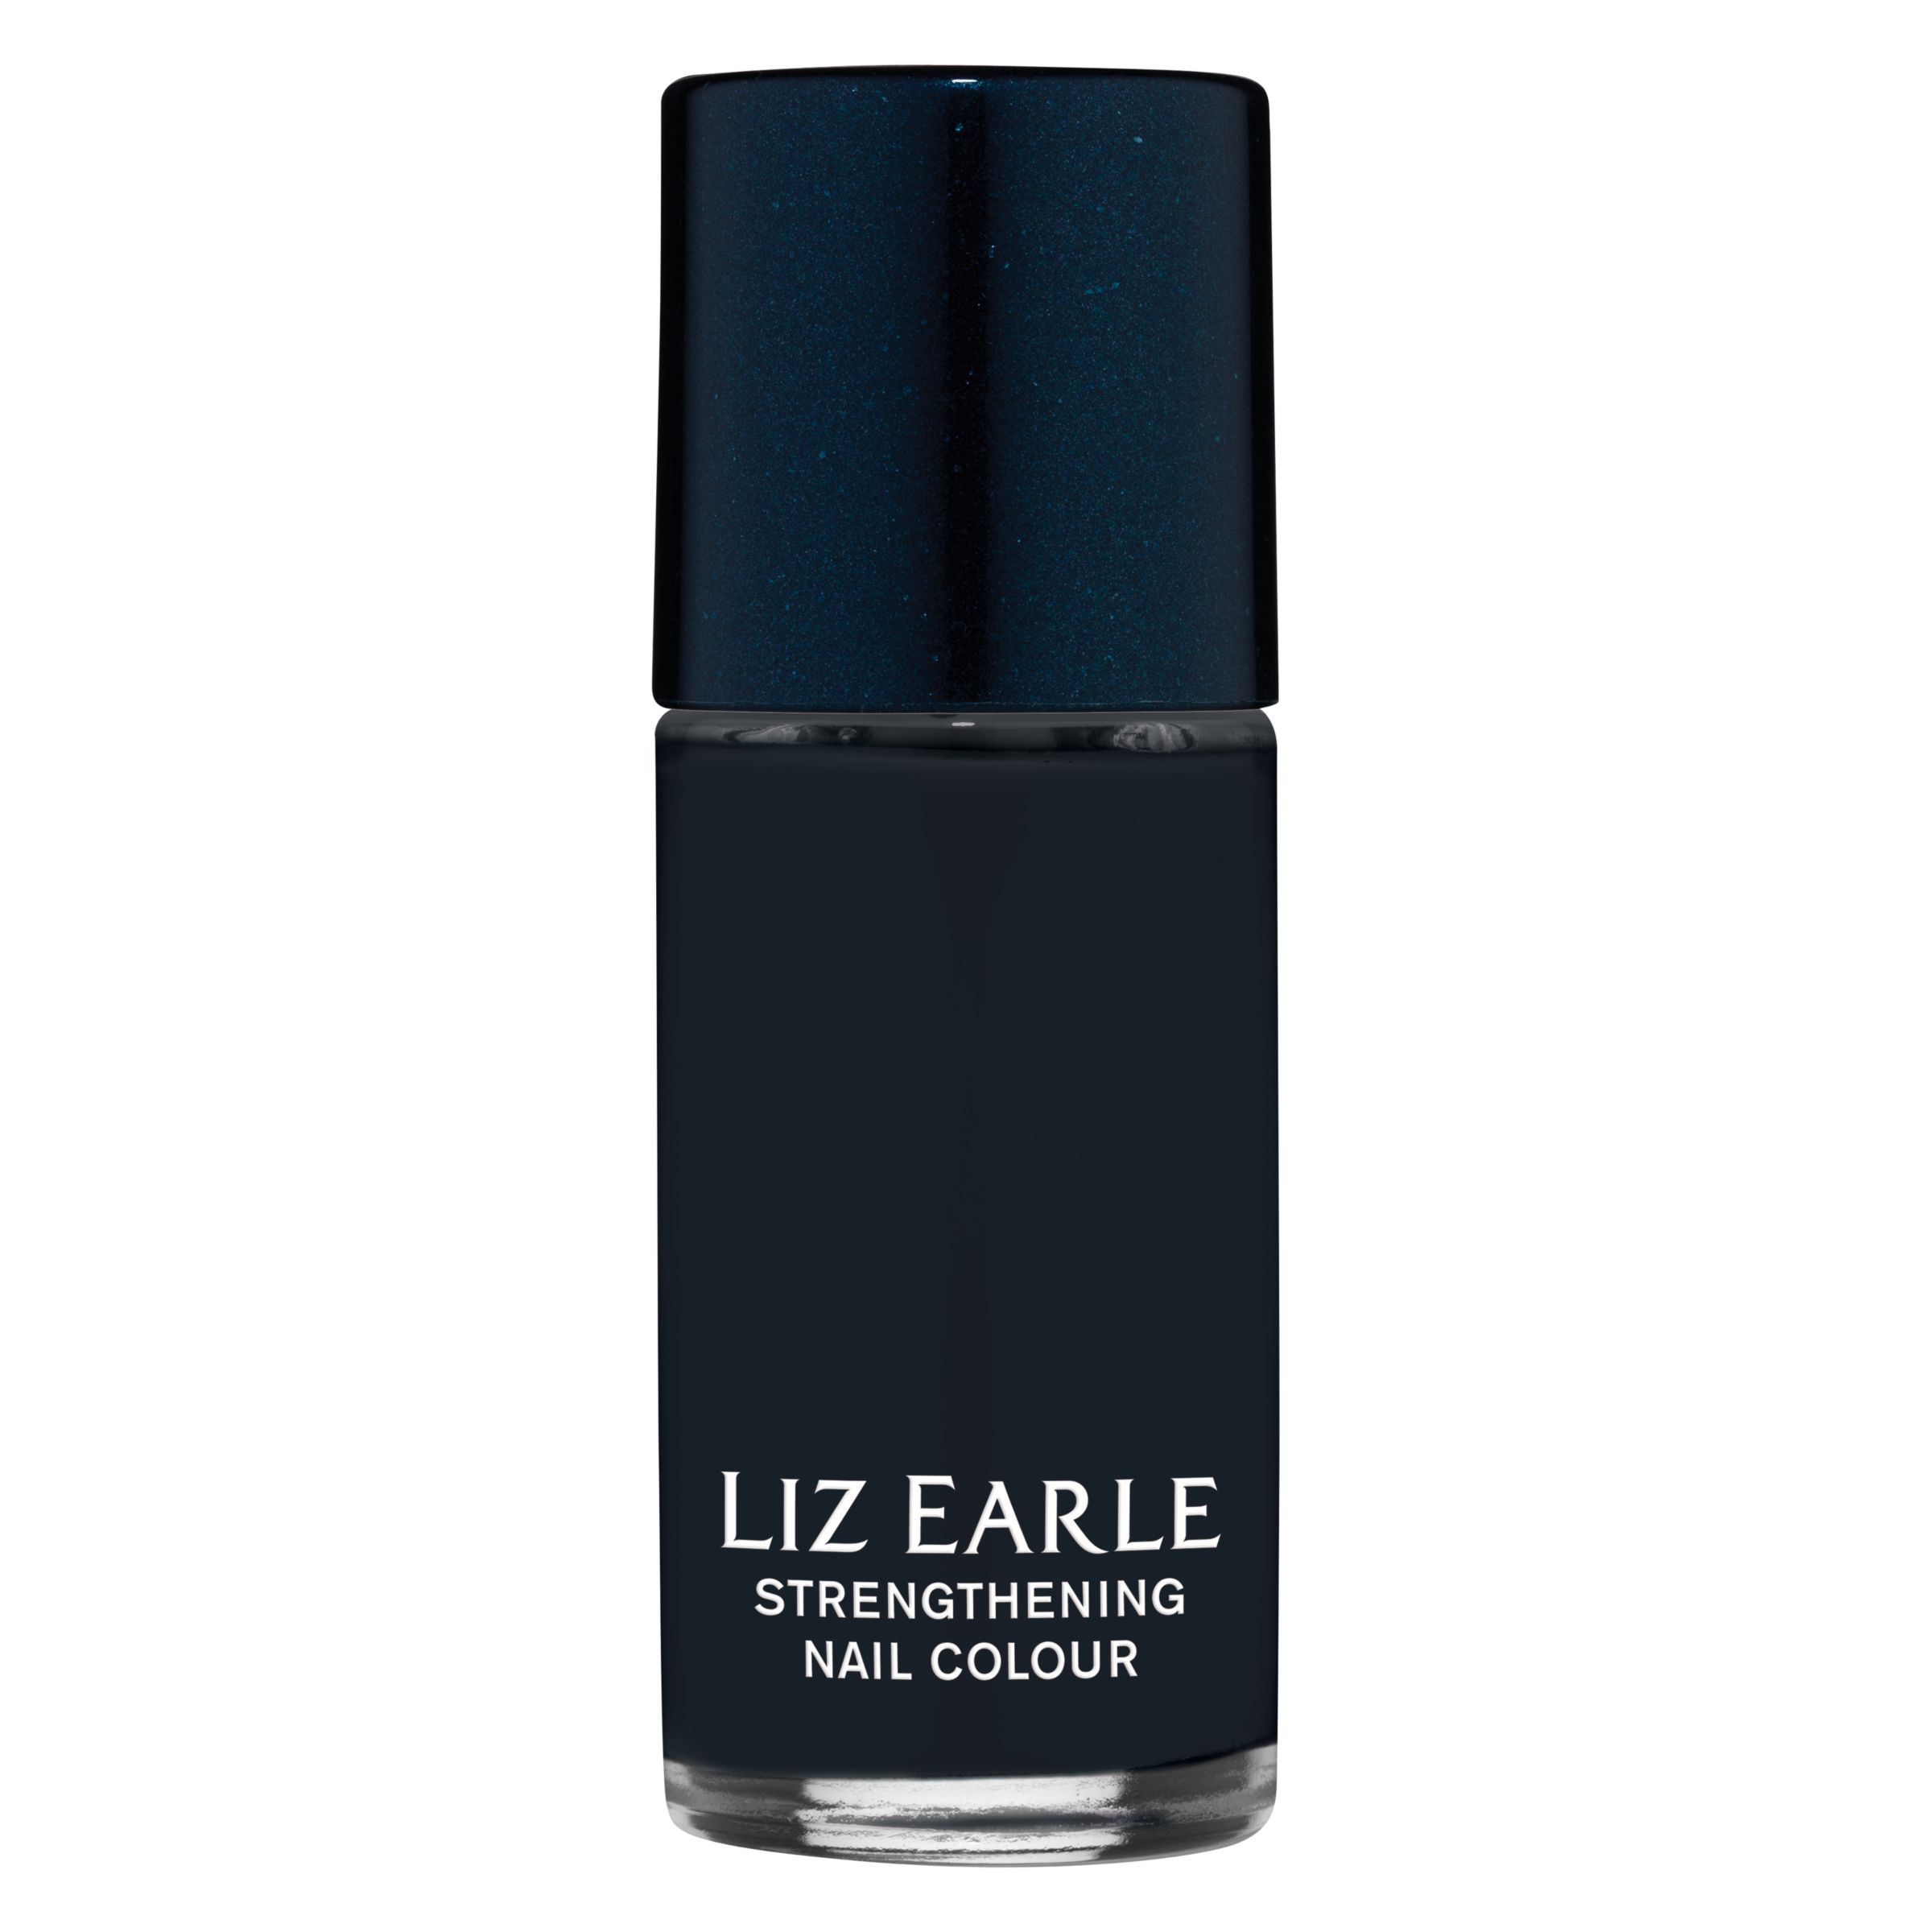 Liz Earle Strengthening Nail Colour, 12ml